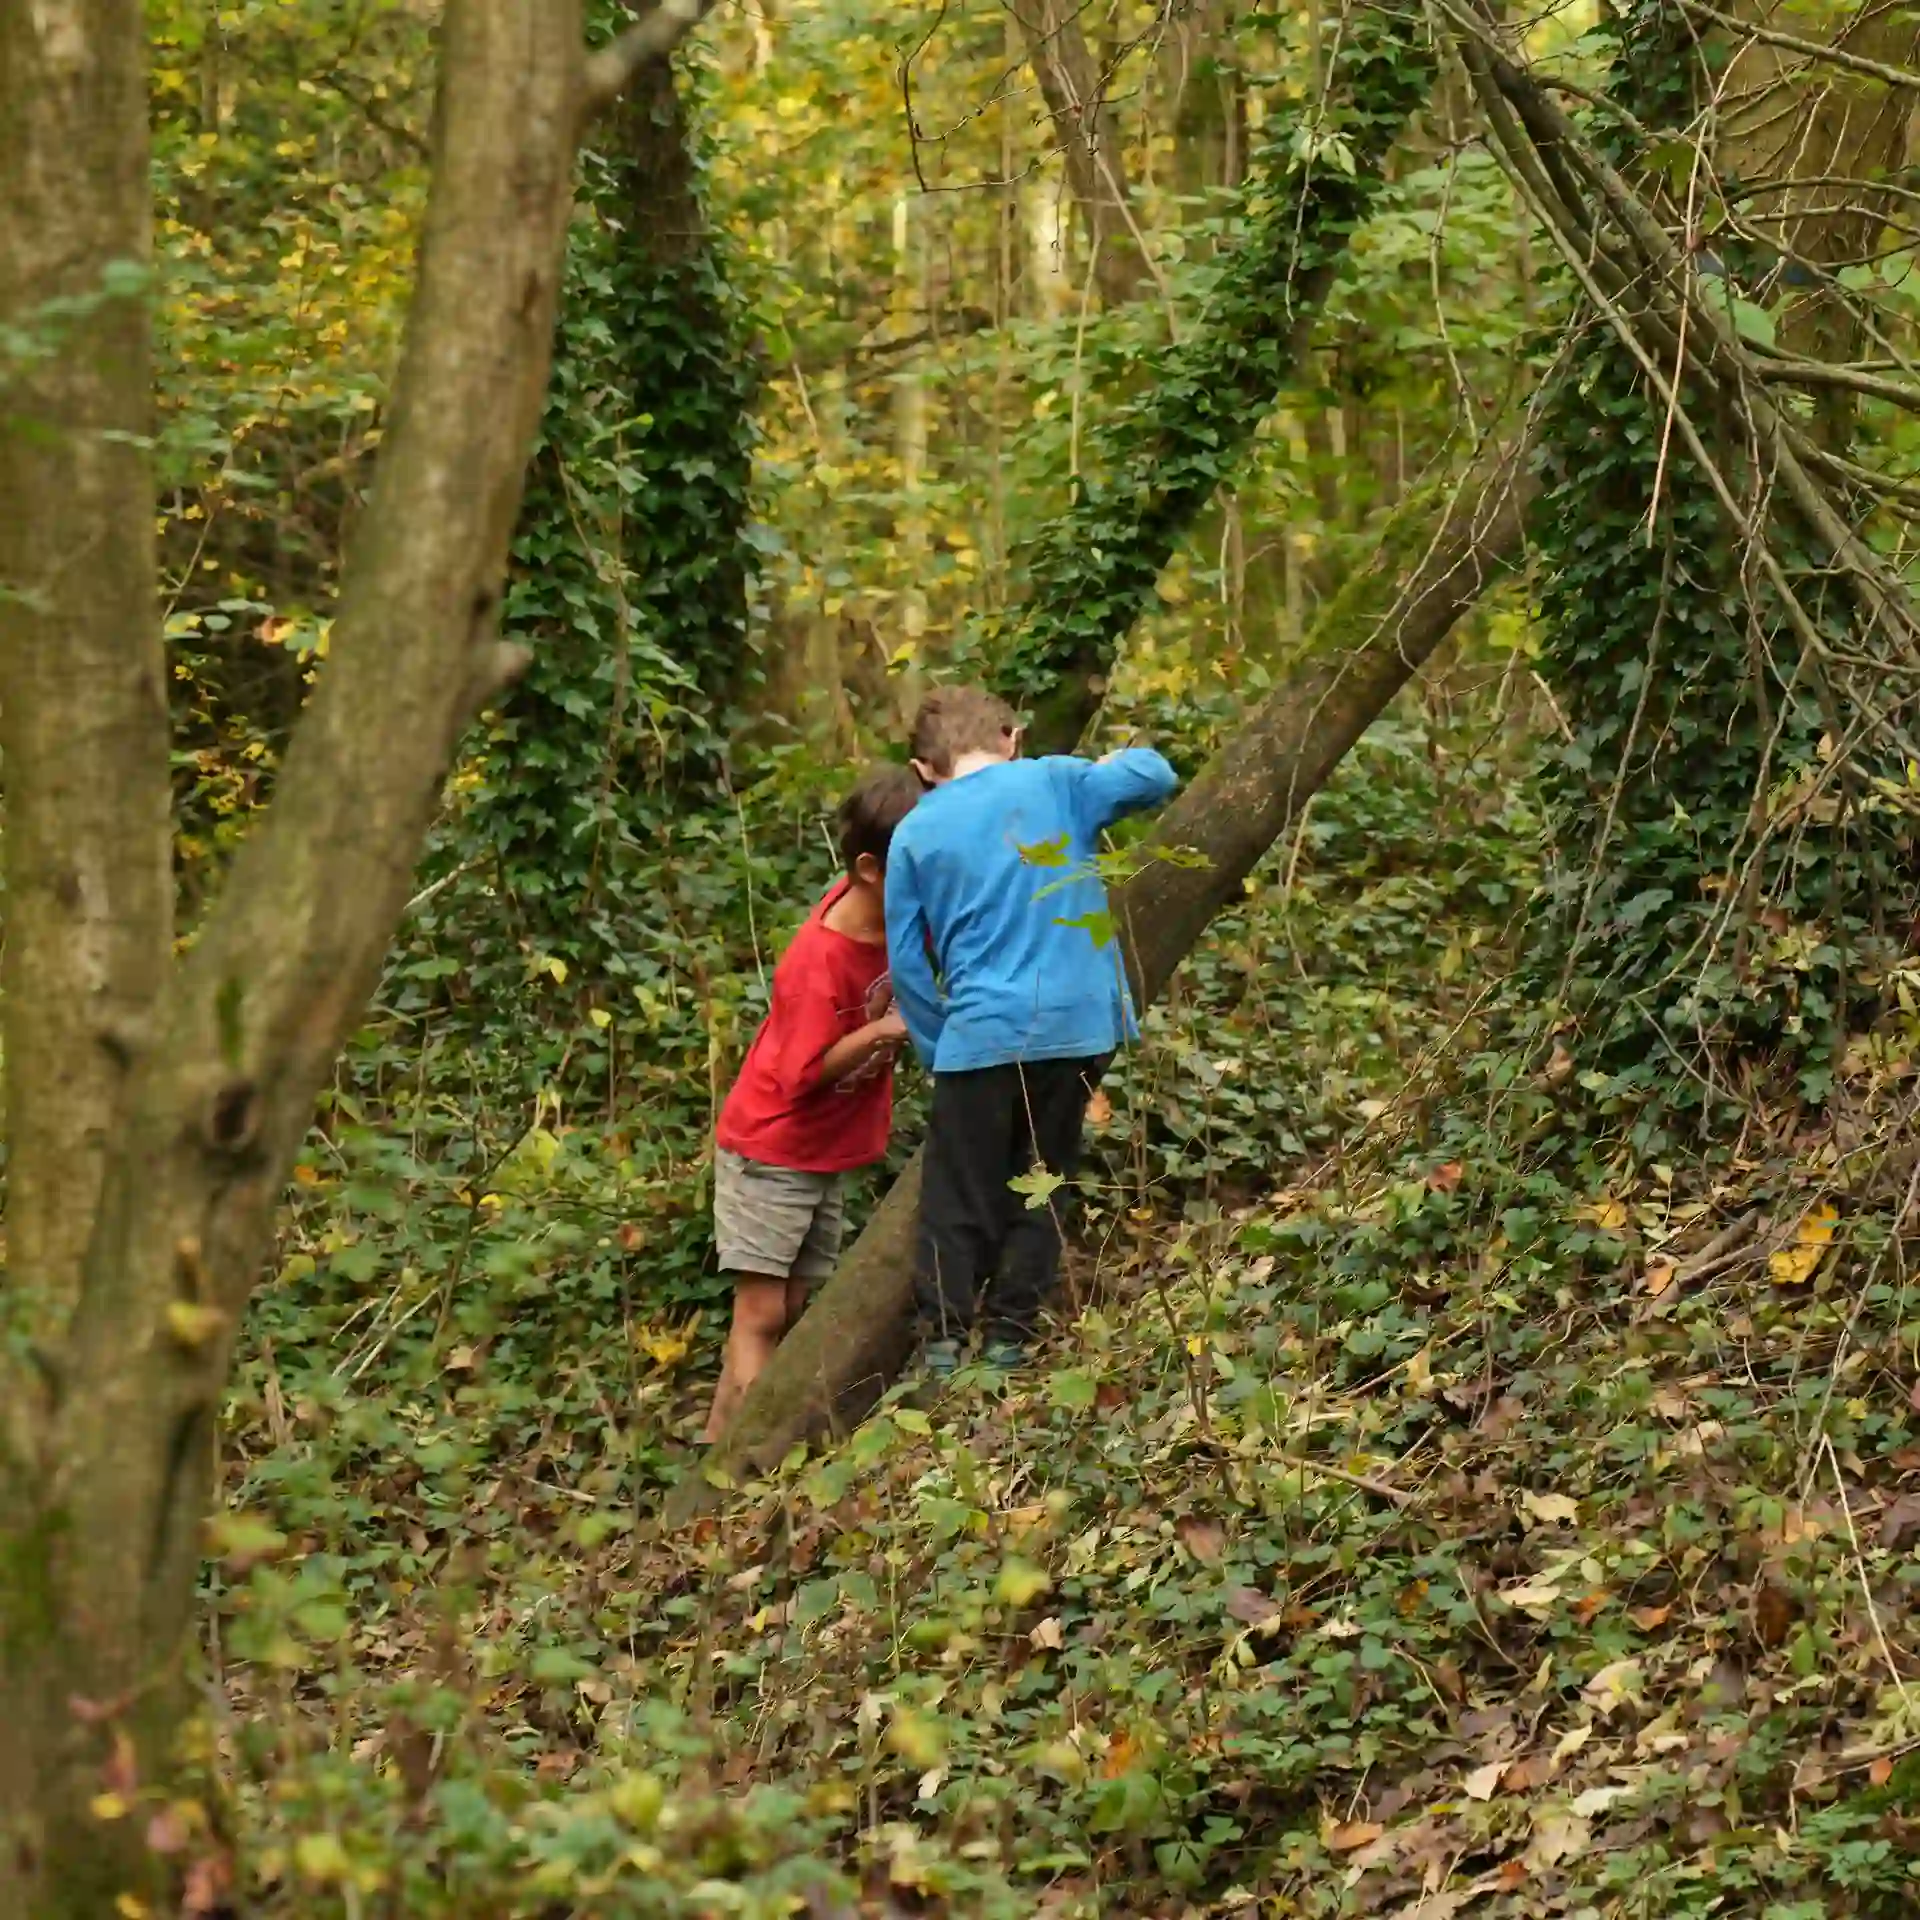 Two boys stood exploring the woodland.